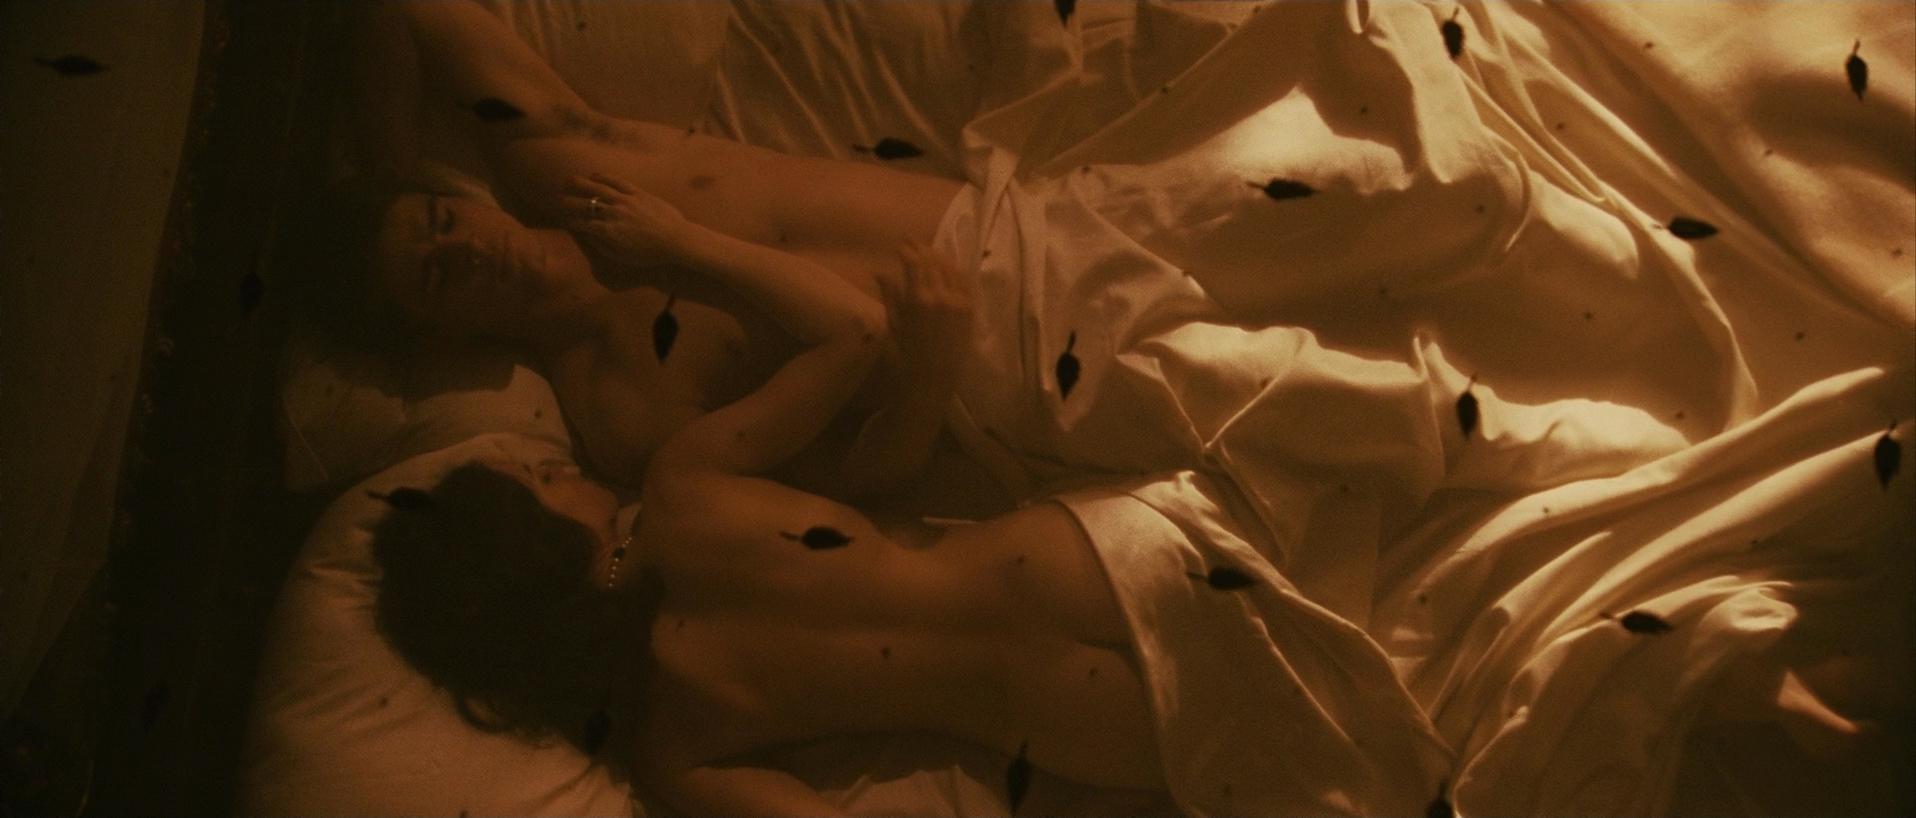 Hilary Swank nude - The Black Dahlia (2006)